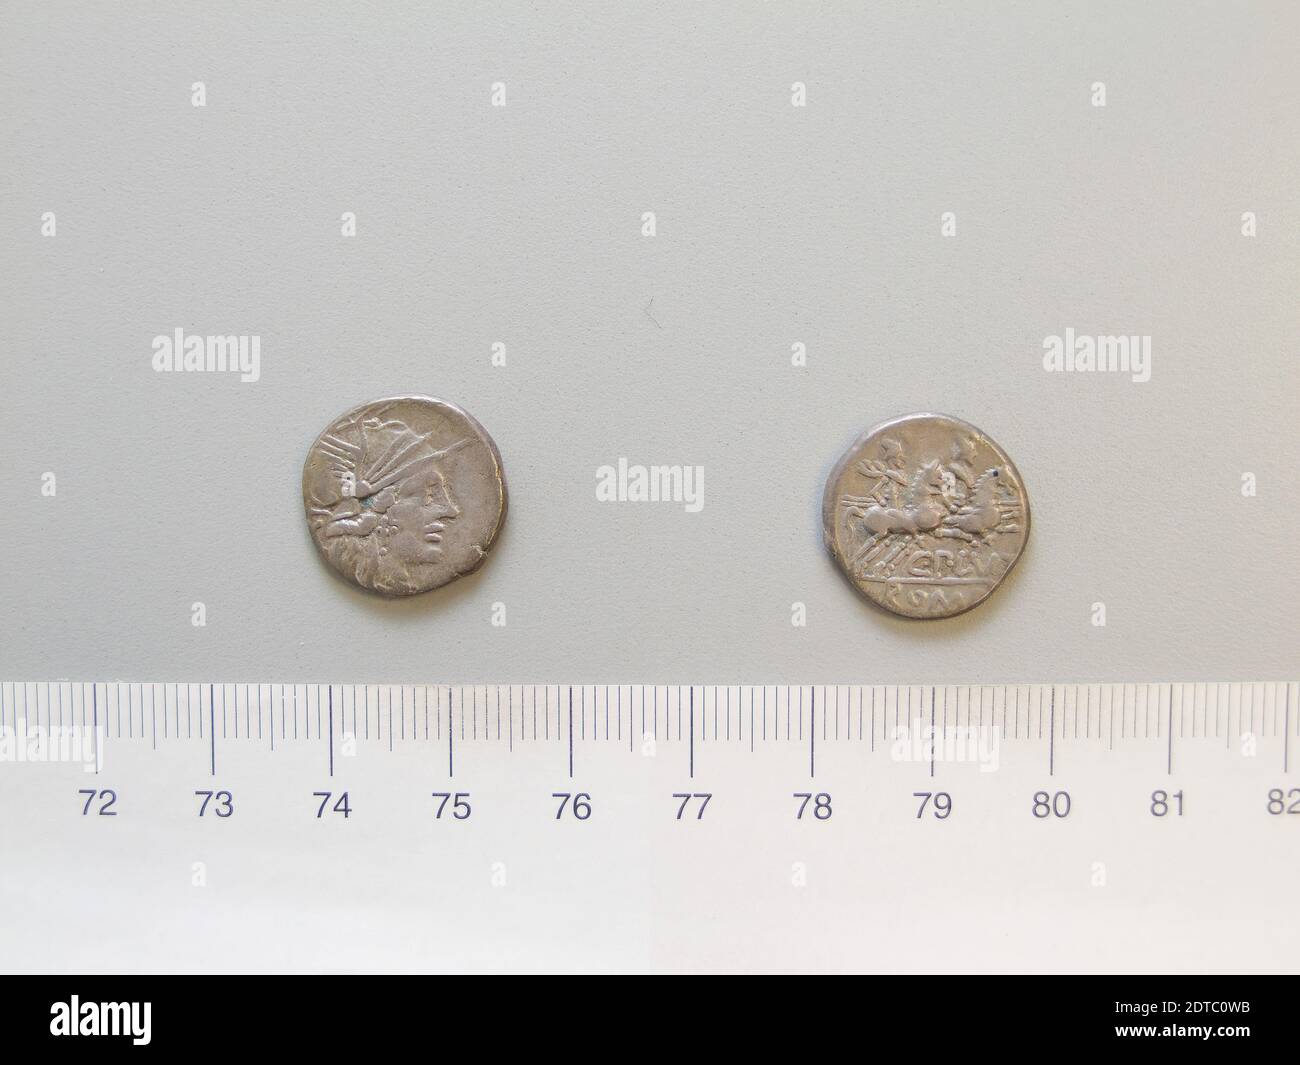 Mint: Rome, Magistrate: C. PLVTI, Denarius from Rome, 121 B.C., Silver, 3.85 g, 10:00, 16.8 mm, Made in Rome, Italy, Roman, 2nd century B.C., Numismatics Stock Photo